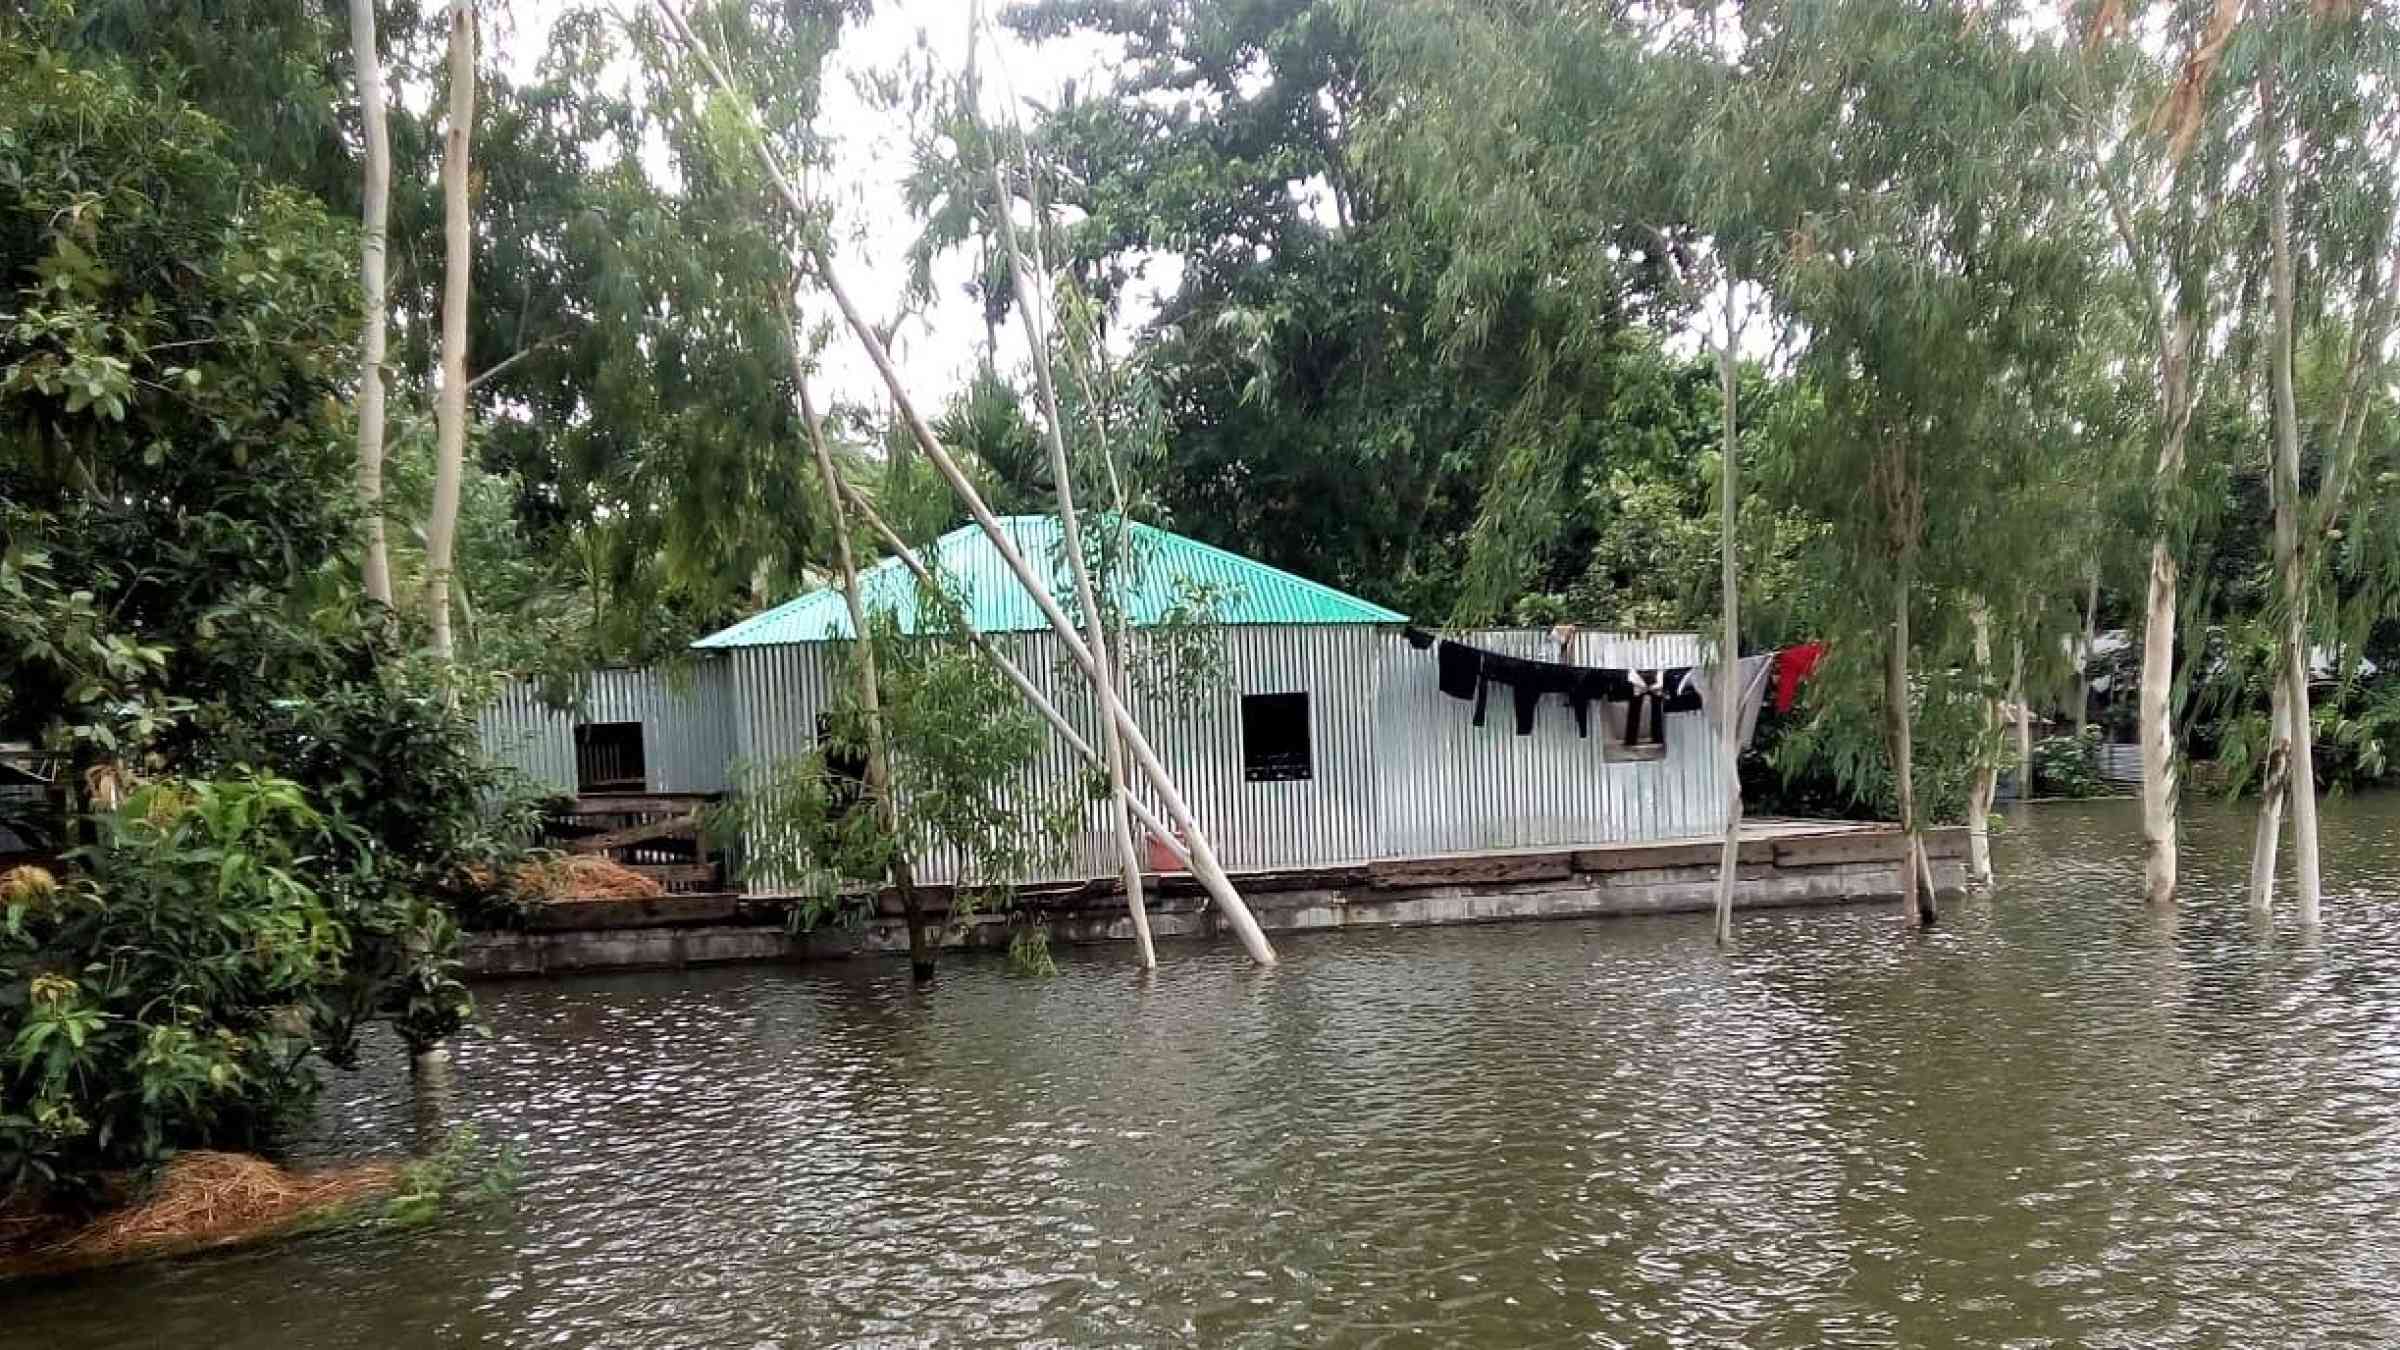 The amphibious housing unit during floods. CORE Bangladesh research team.